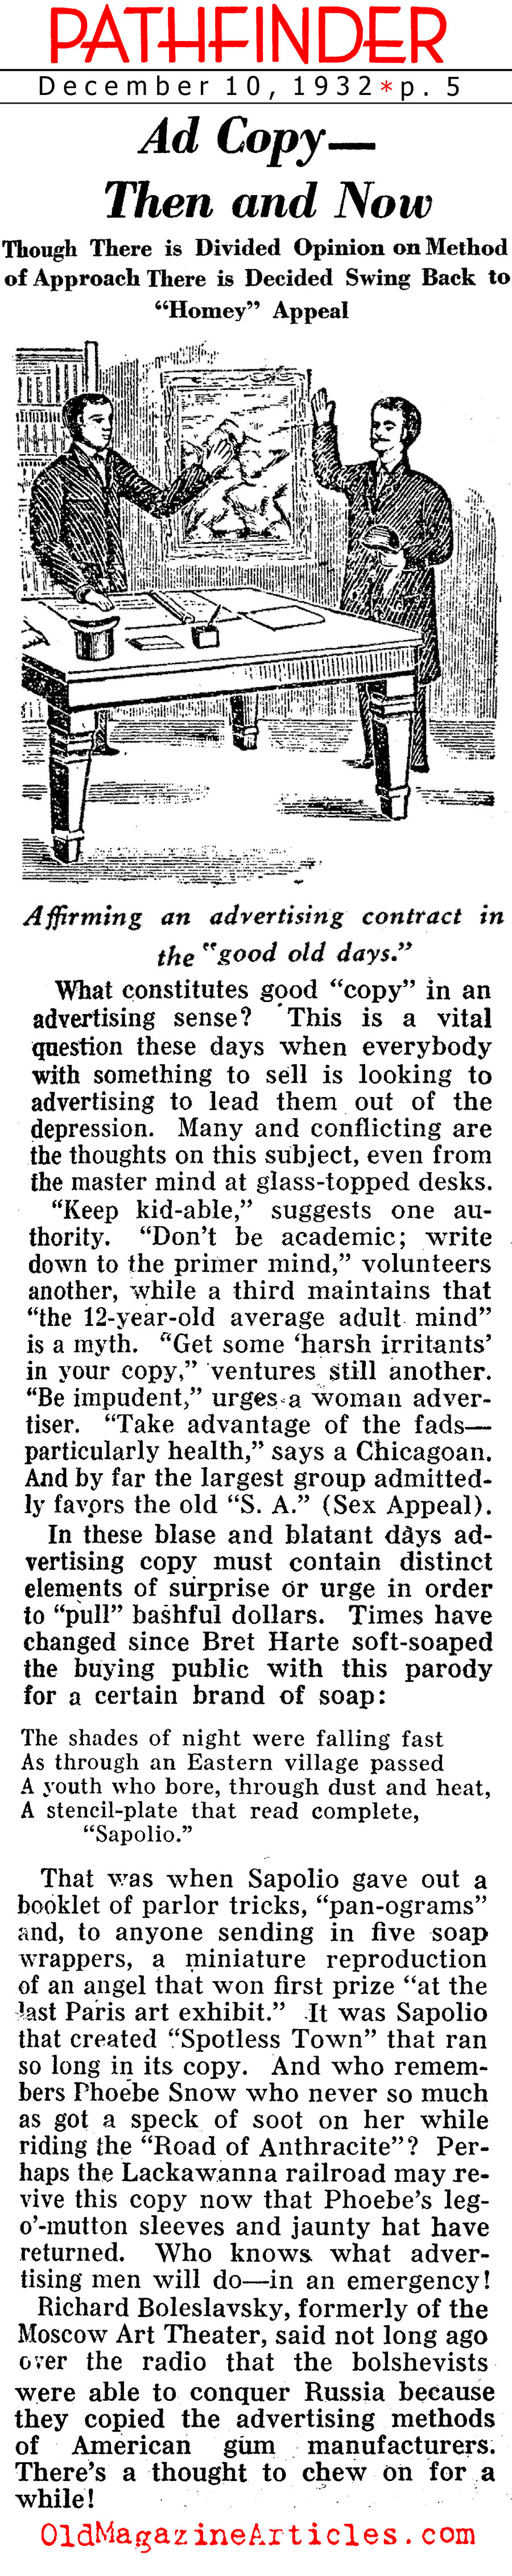 Ad Man: Heal Thyself... (Pathfinder Magazine, 1932)